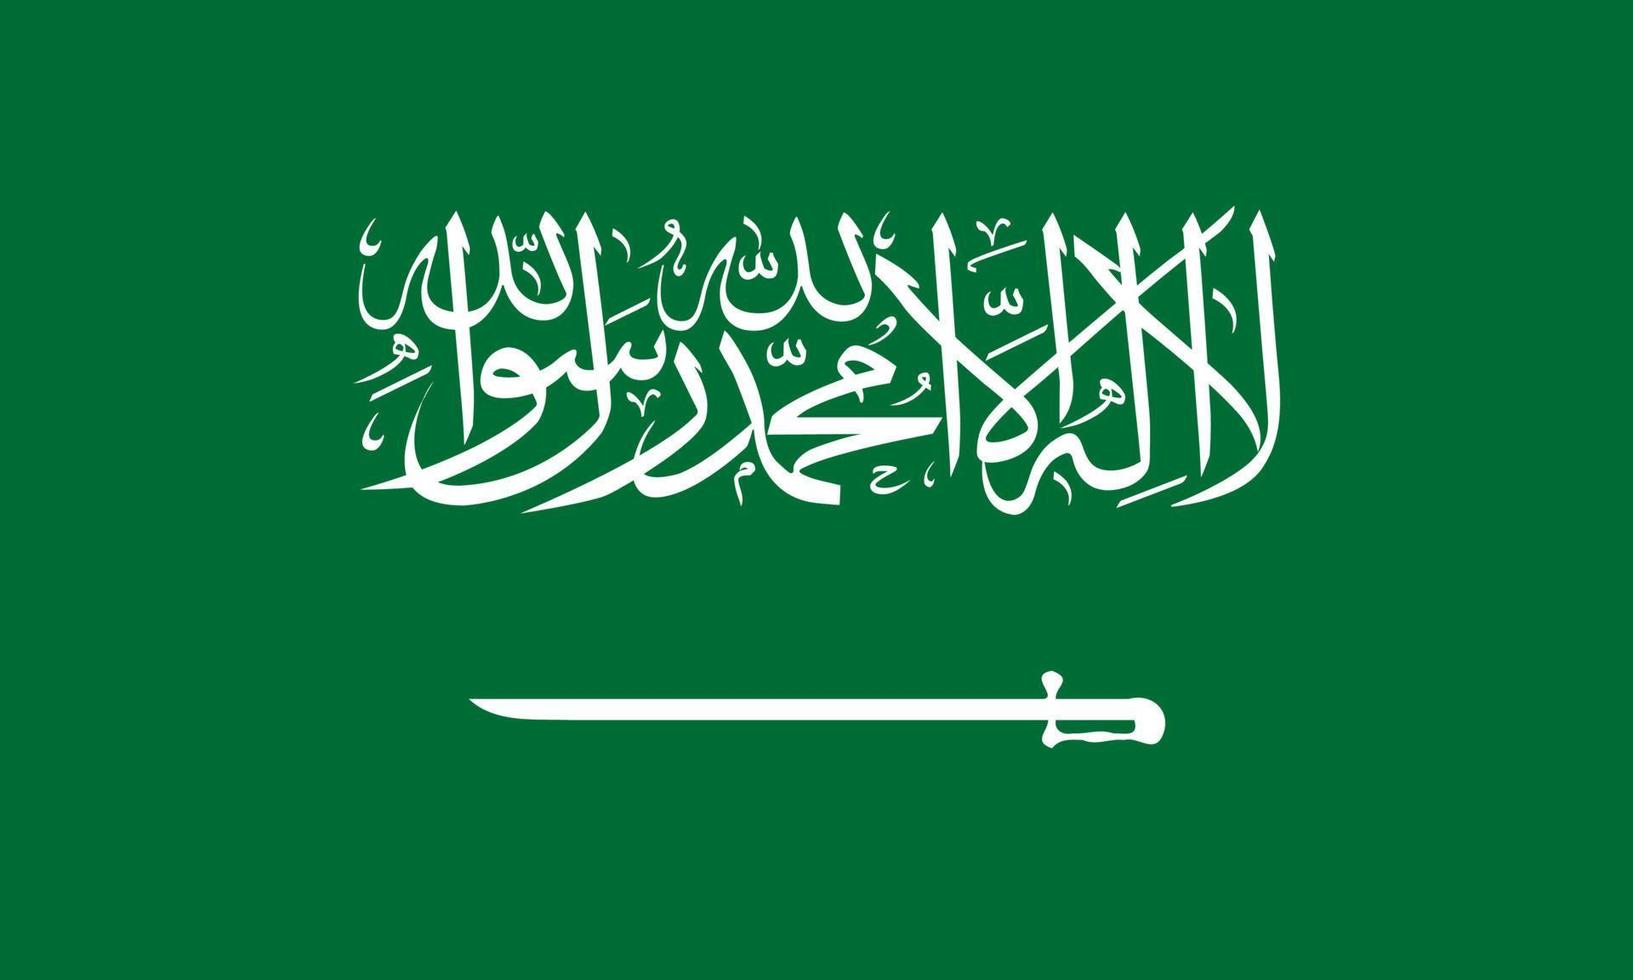 Vector illustration of the Saudi Arabia flag